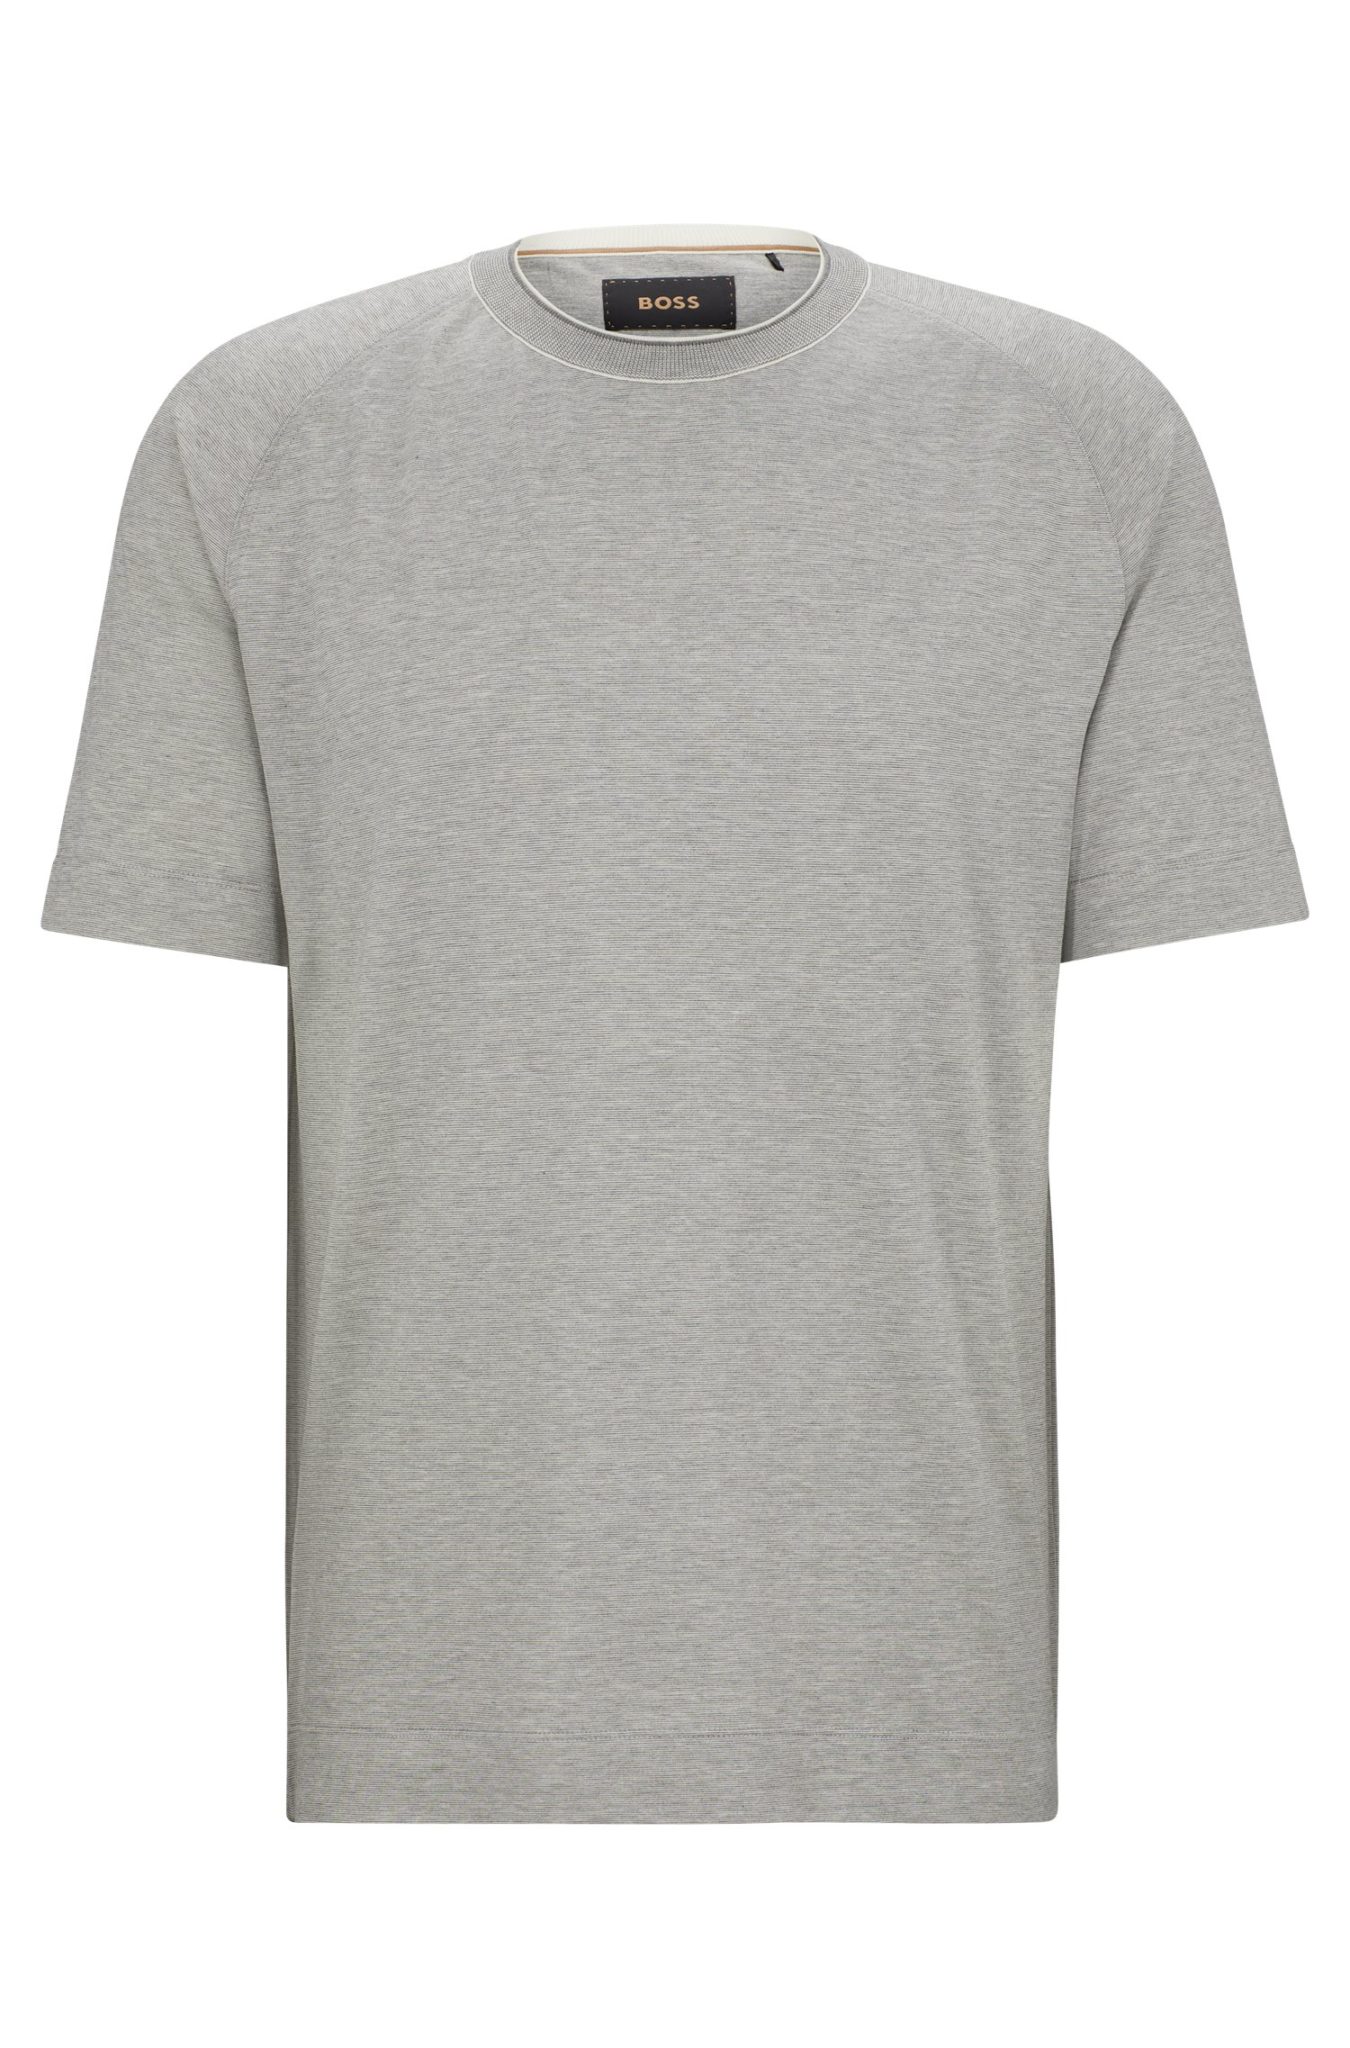 Hugo Boss T-shirt Regular Fit en coton et soie